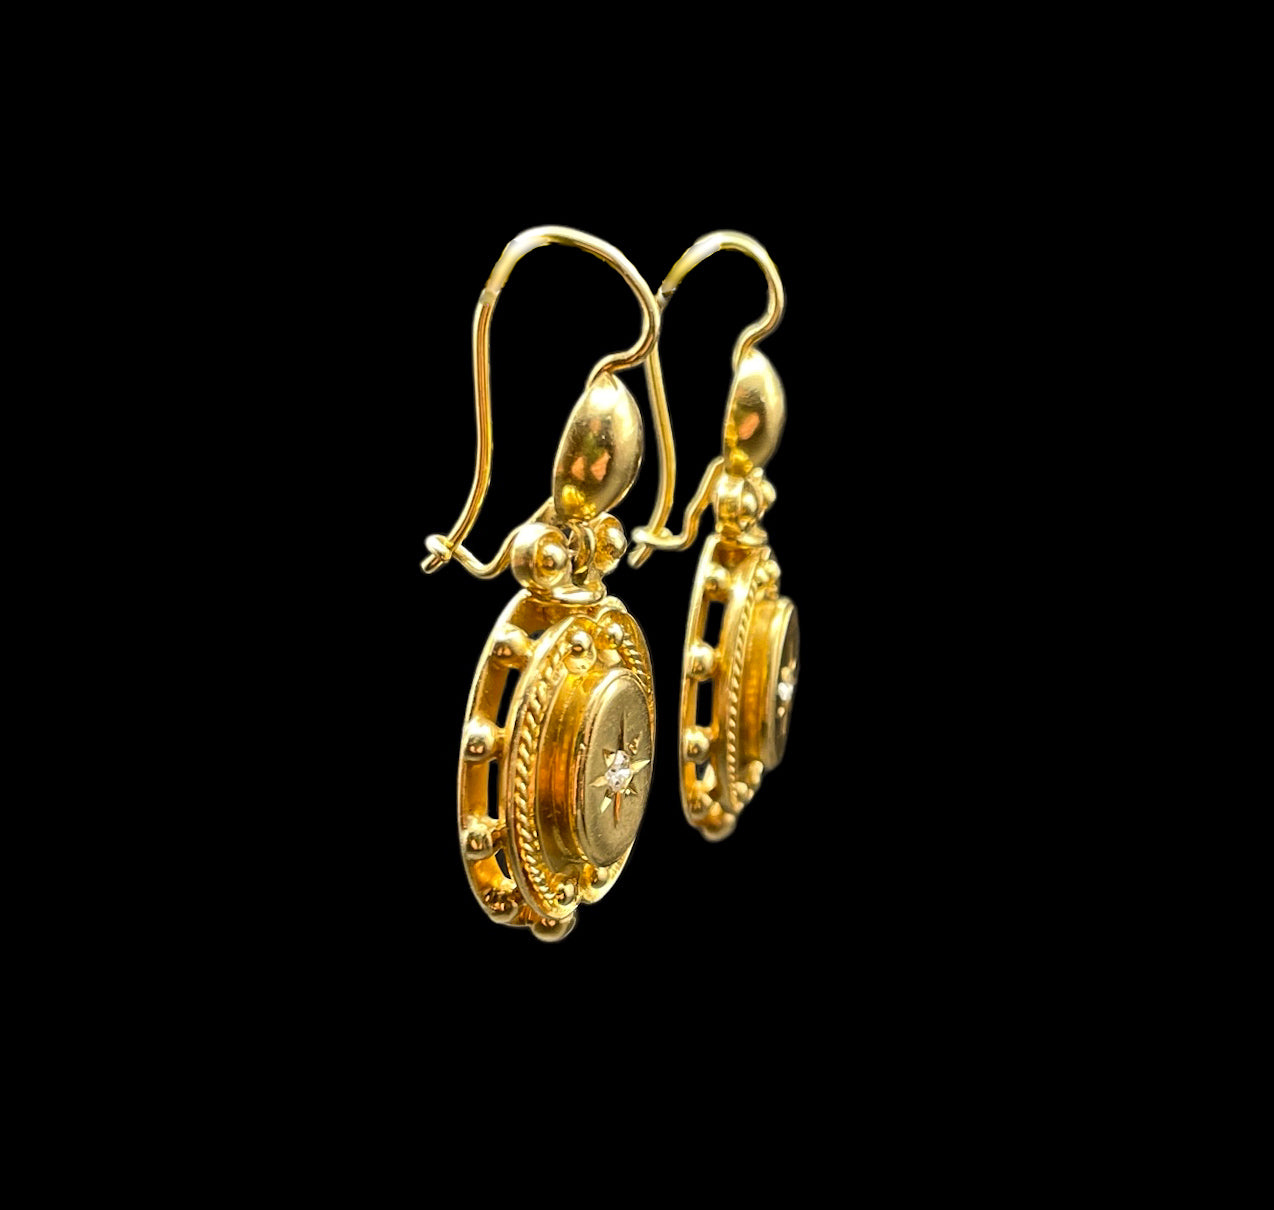 Reproduction Etruscan Revival Earrings